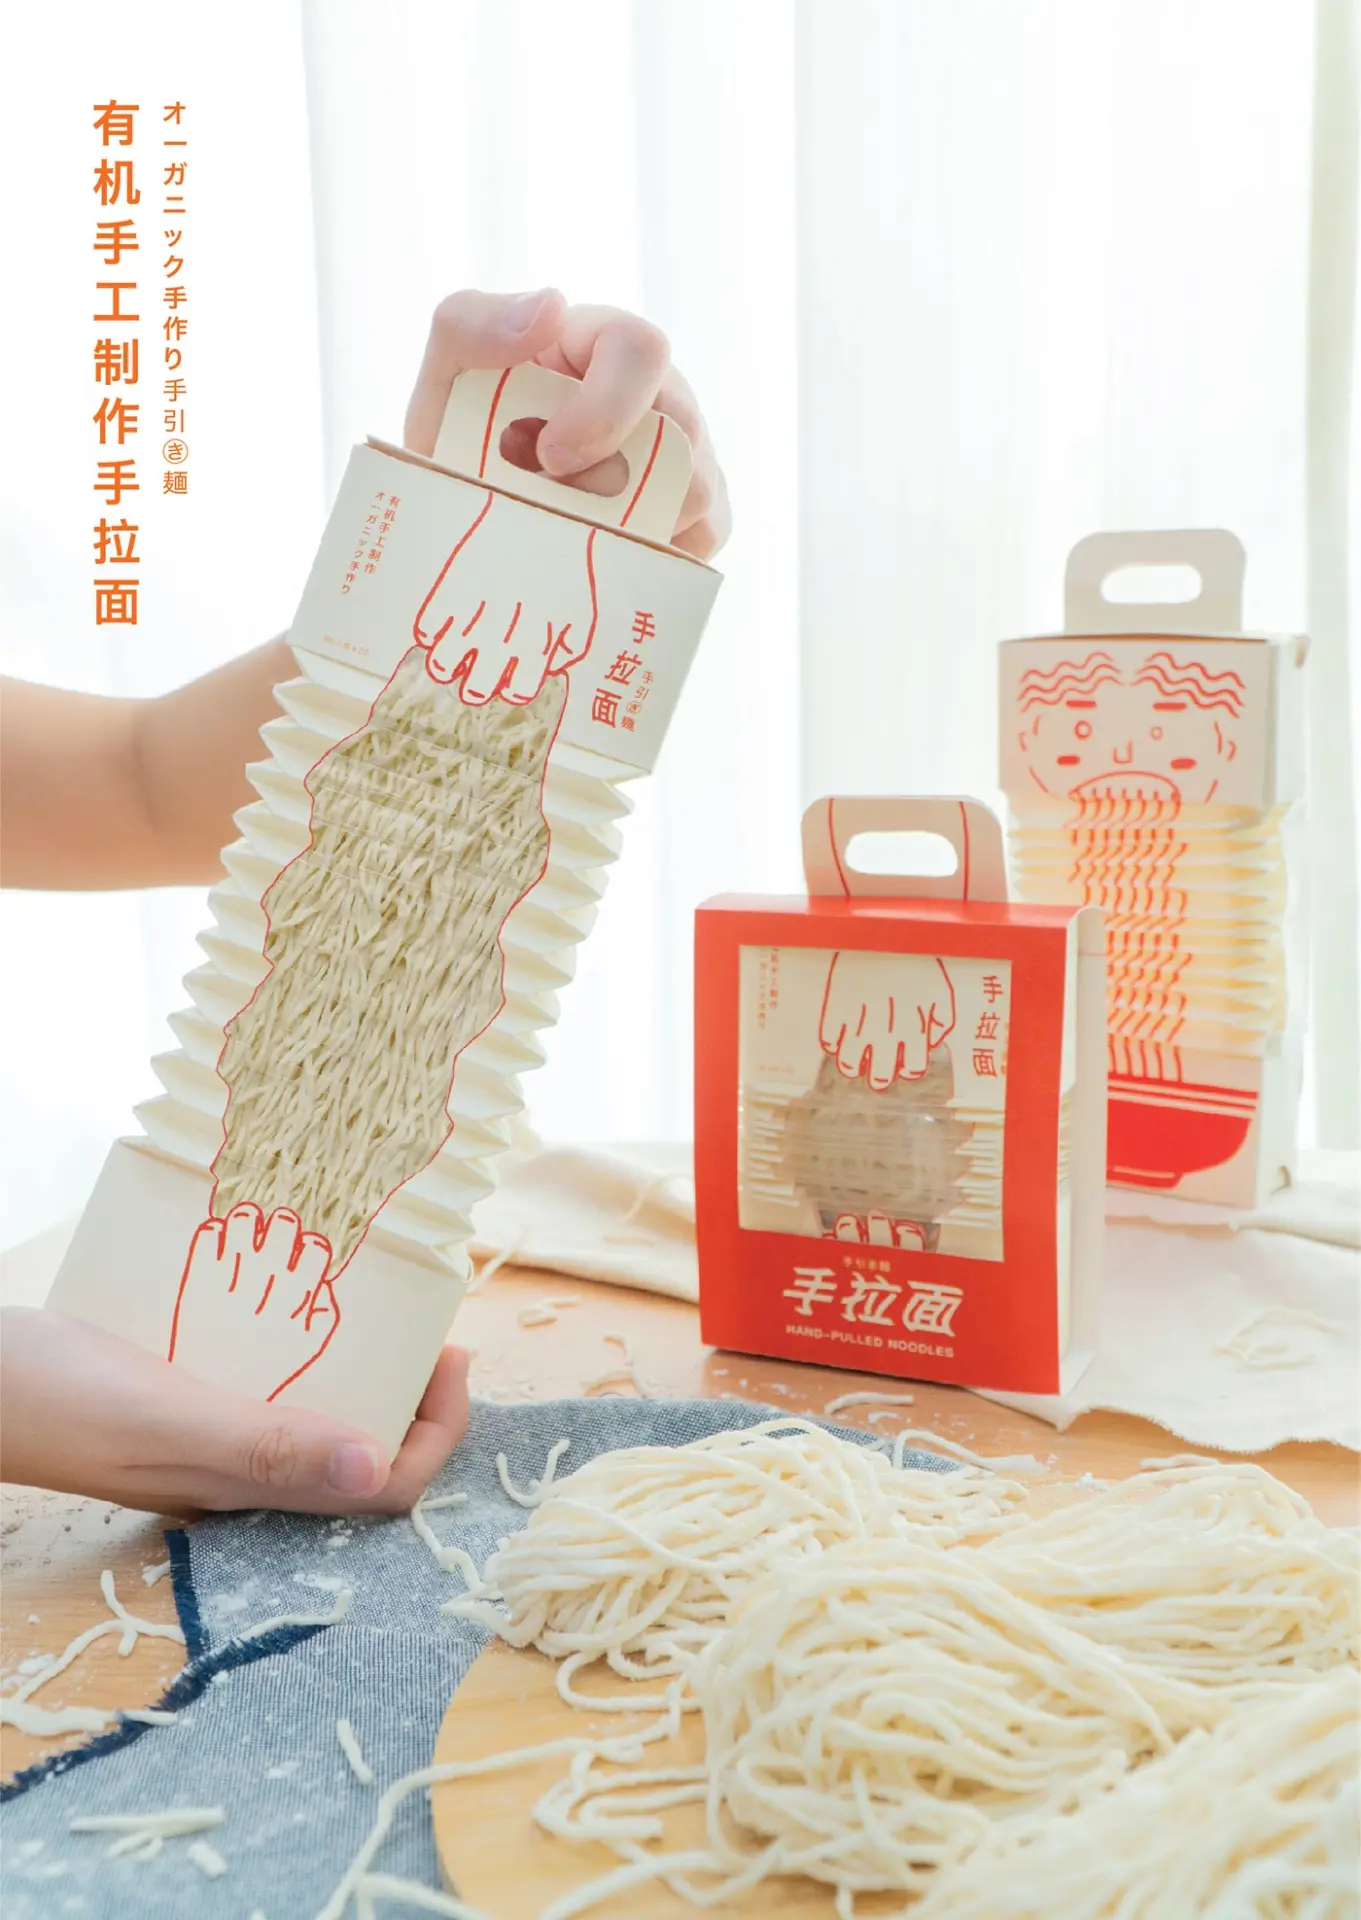 Blogduwebdesign inspiration packaging sac originaux pulled noodles